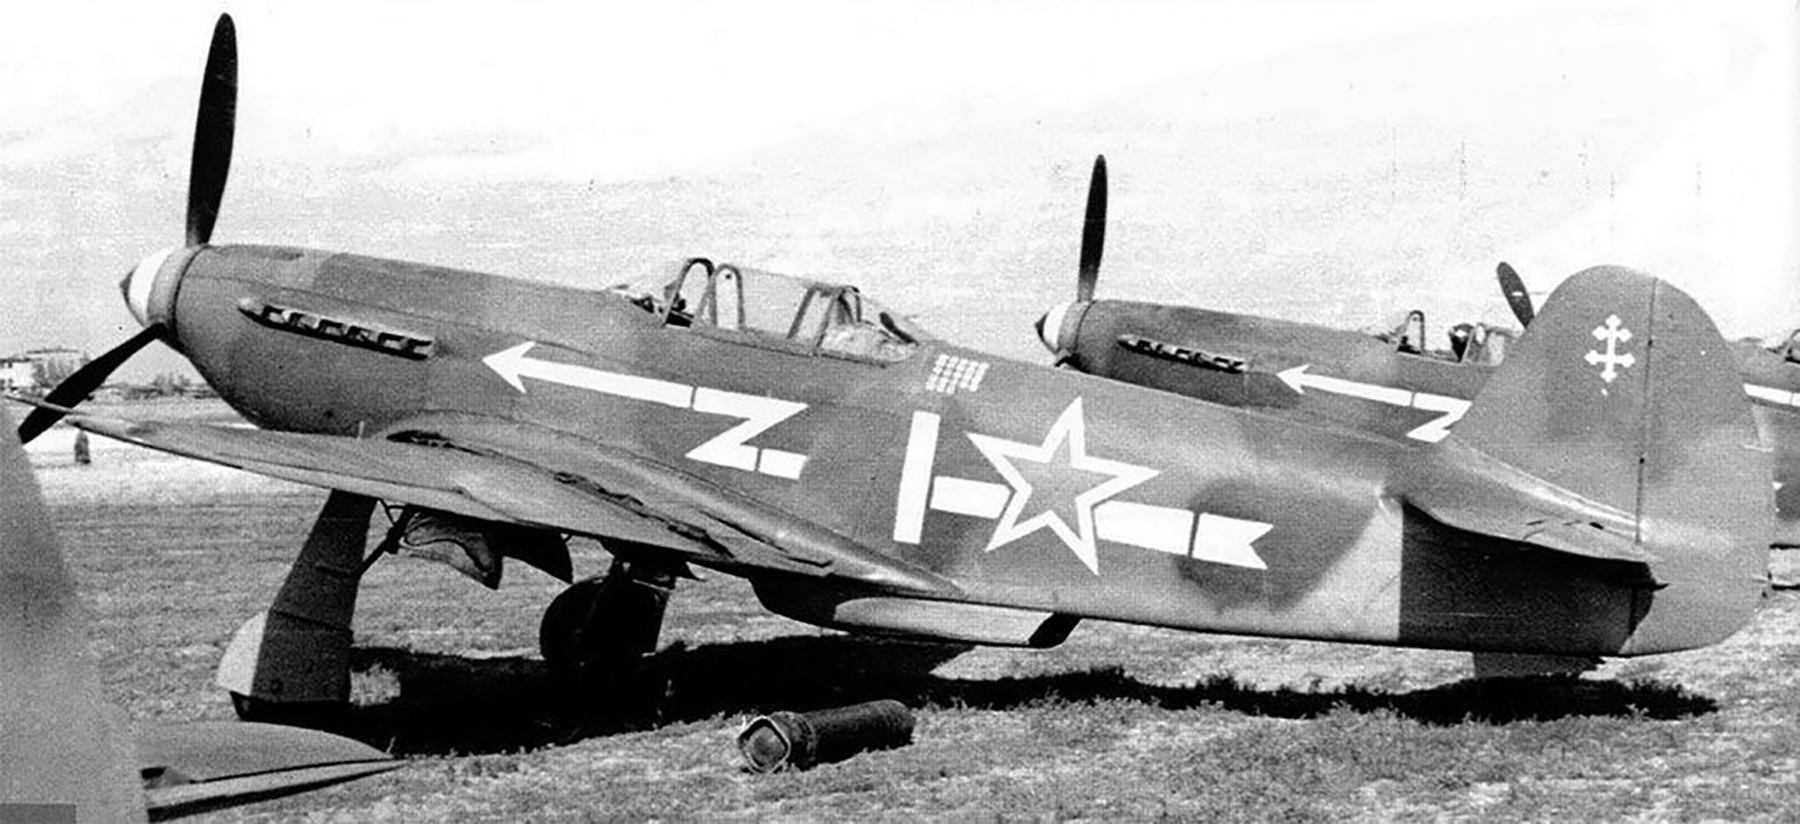 [Zvezda] 1/48 - Yakovlev Yak-3 Normandie Niemen   (yak3) - Page 2 Yakovlev-Yak-3-1IAP-Normandie-Niemen-303IAD-White-1-Stuttgart-1945-01